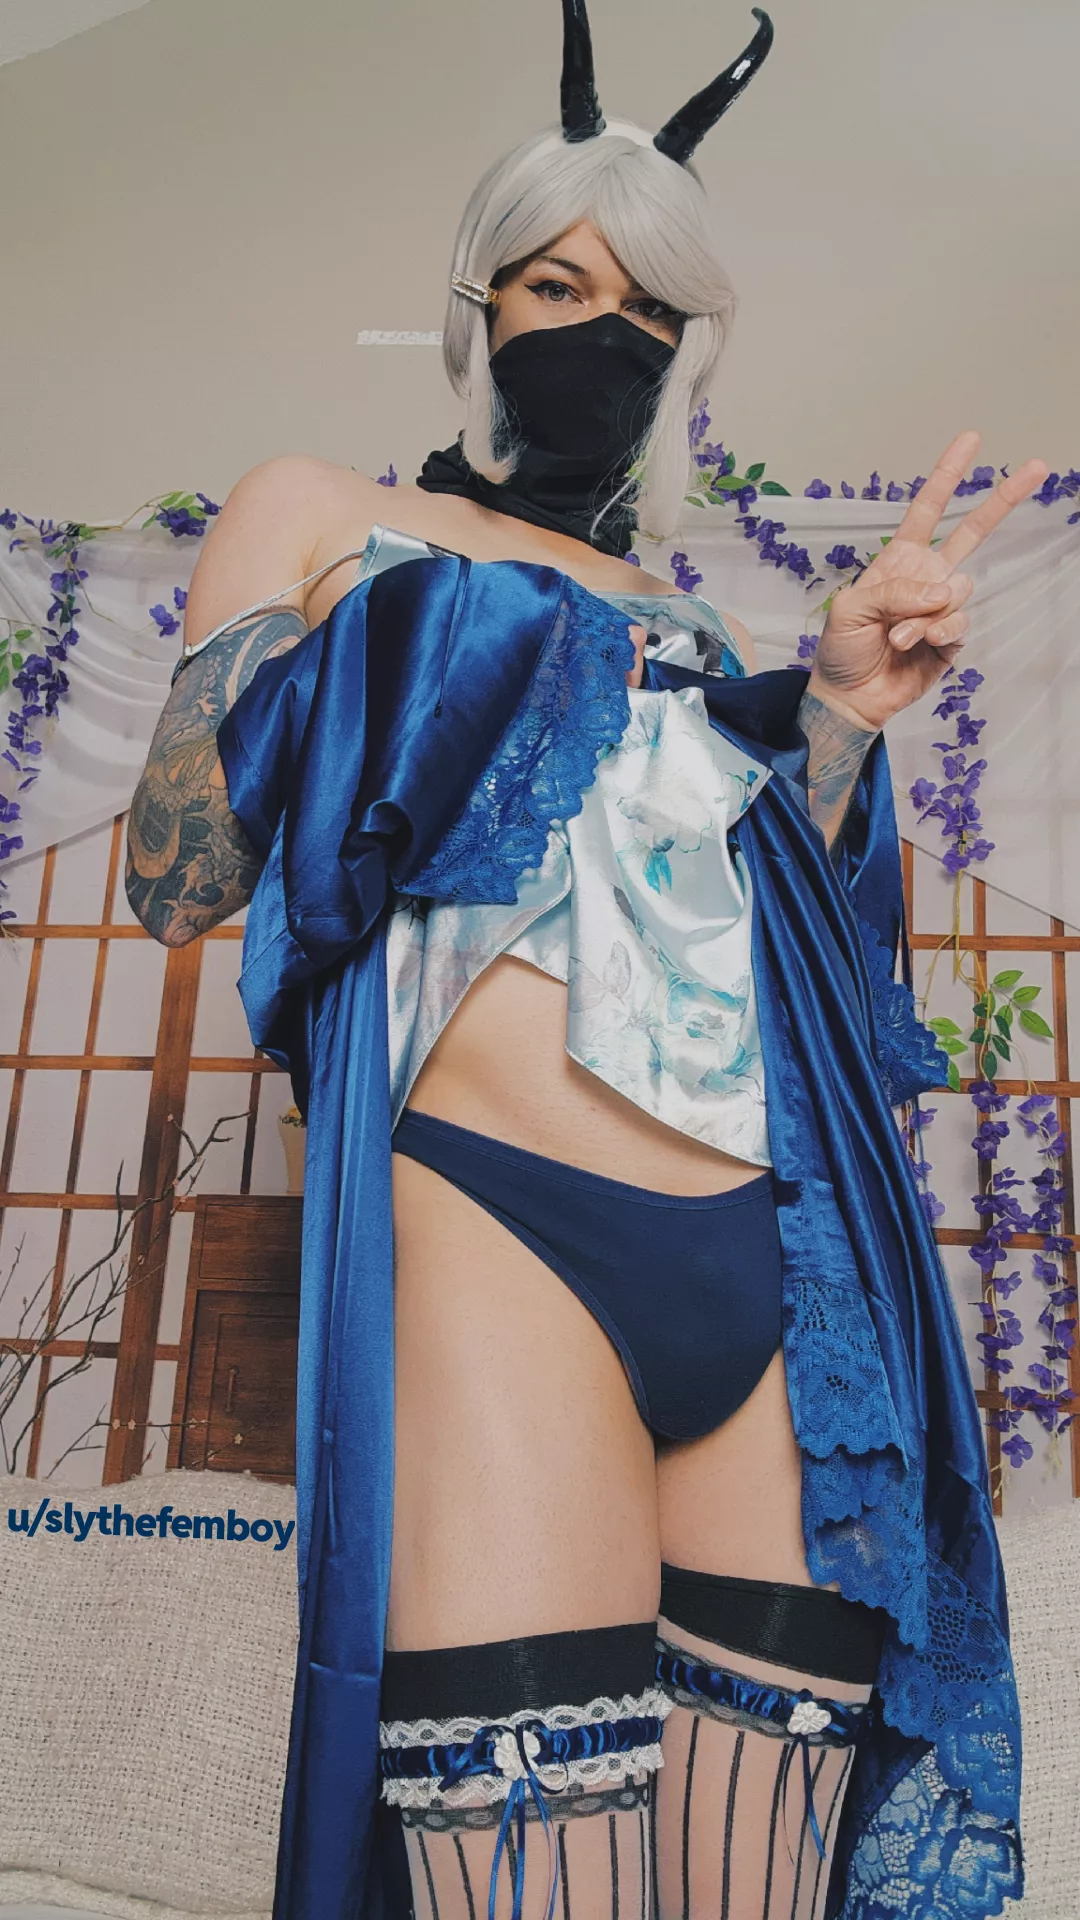 1080px x 1920px - Blue demon girl nudes by Slythefemboy